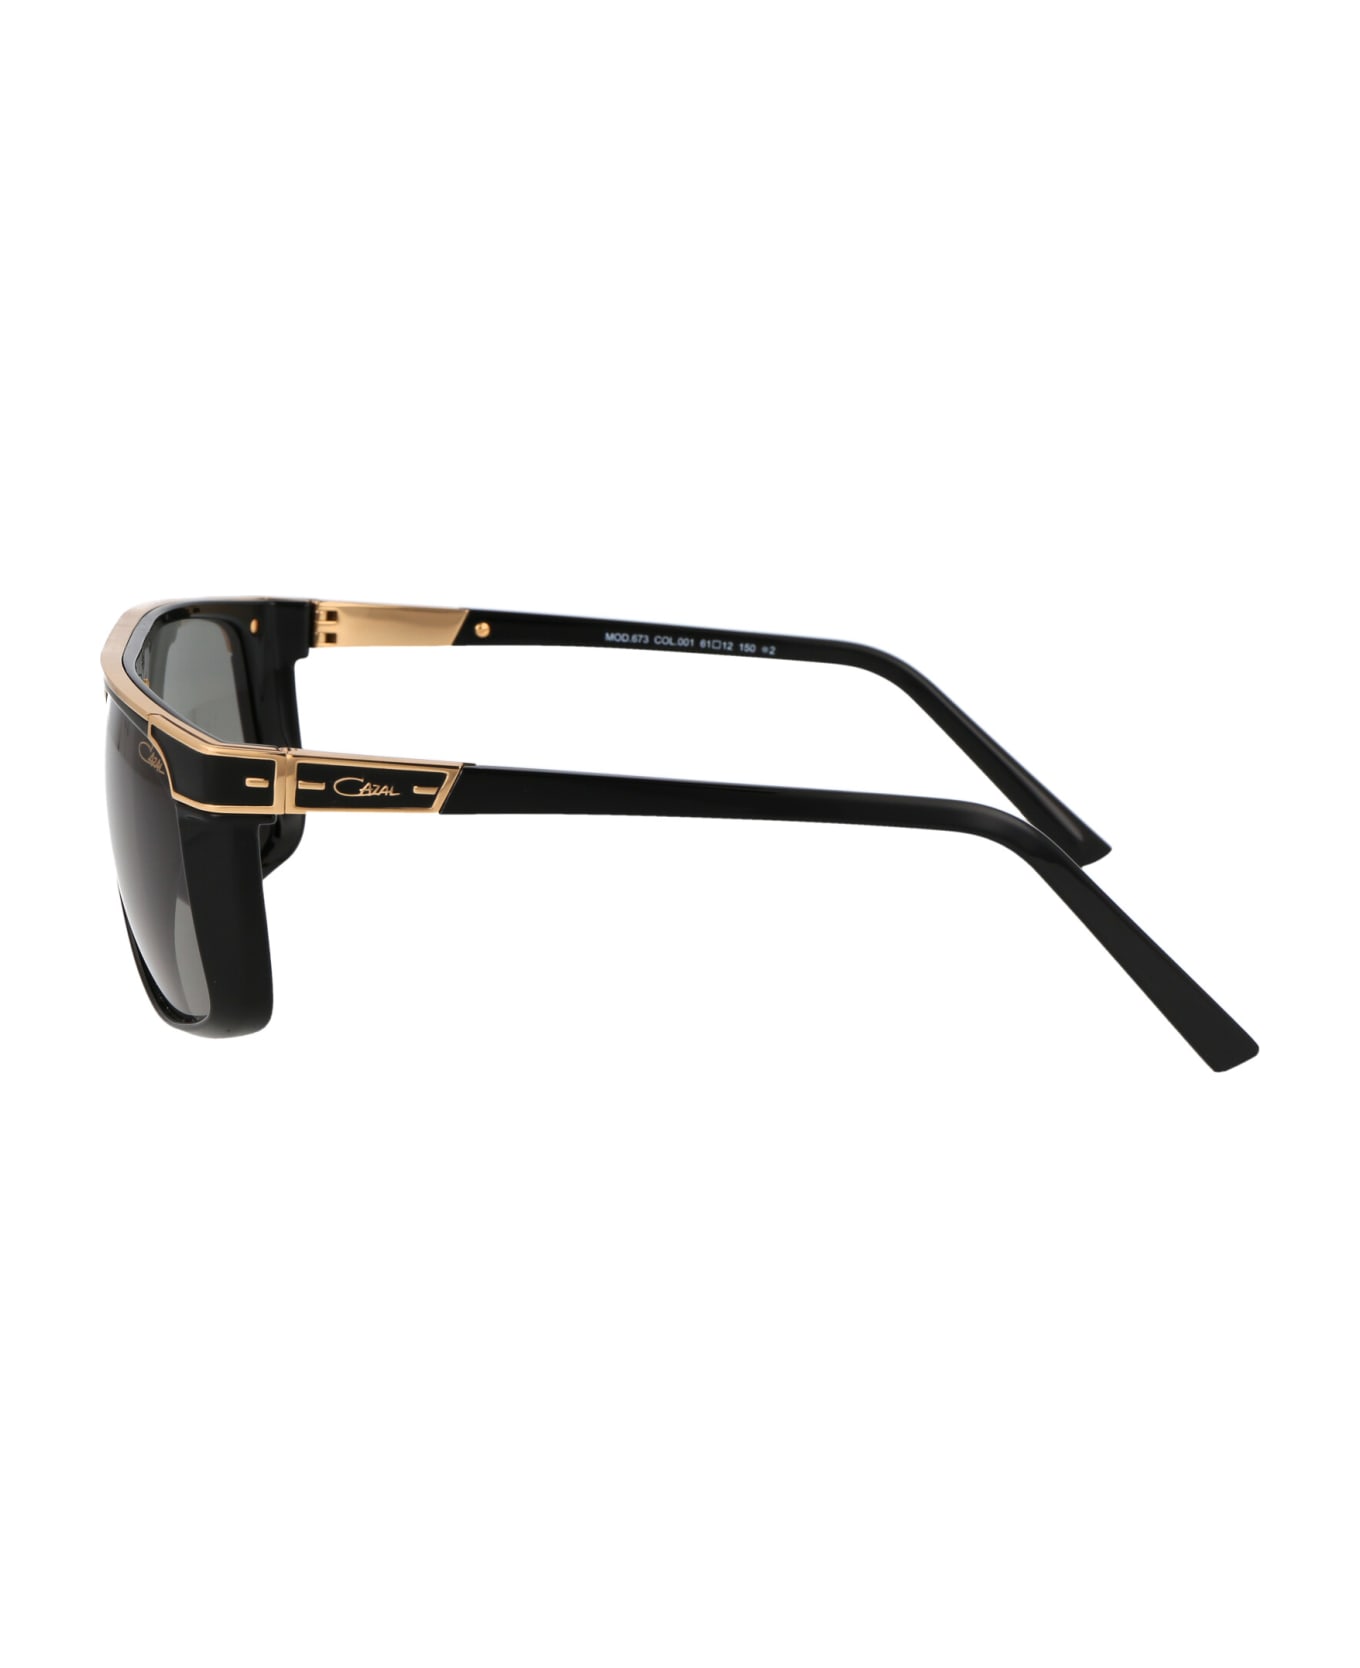 Cazal Mod. 673 Sunglasses - 001 BLACK